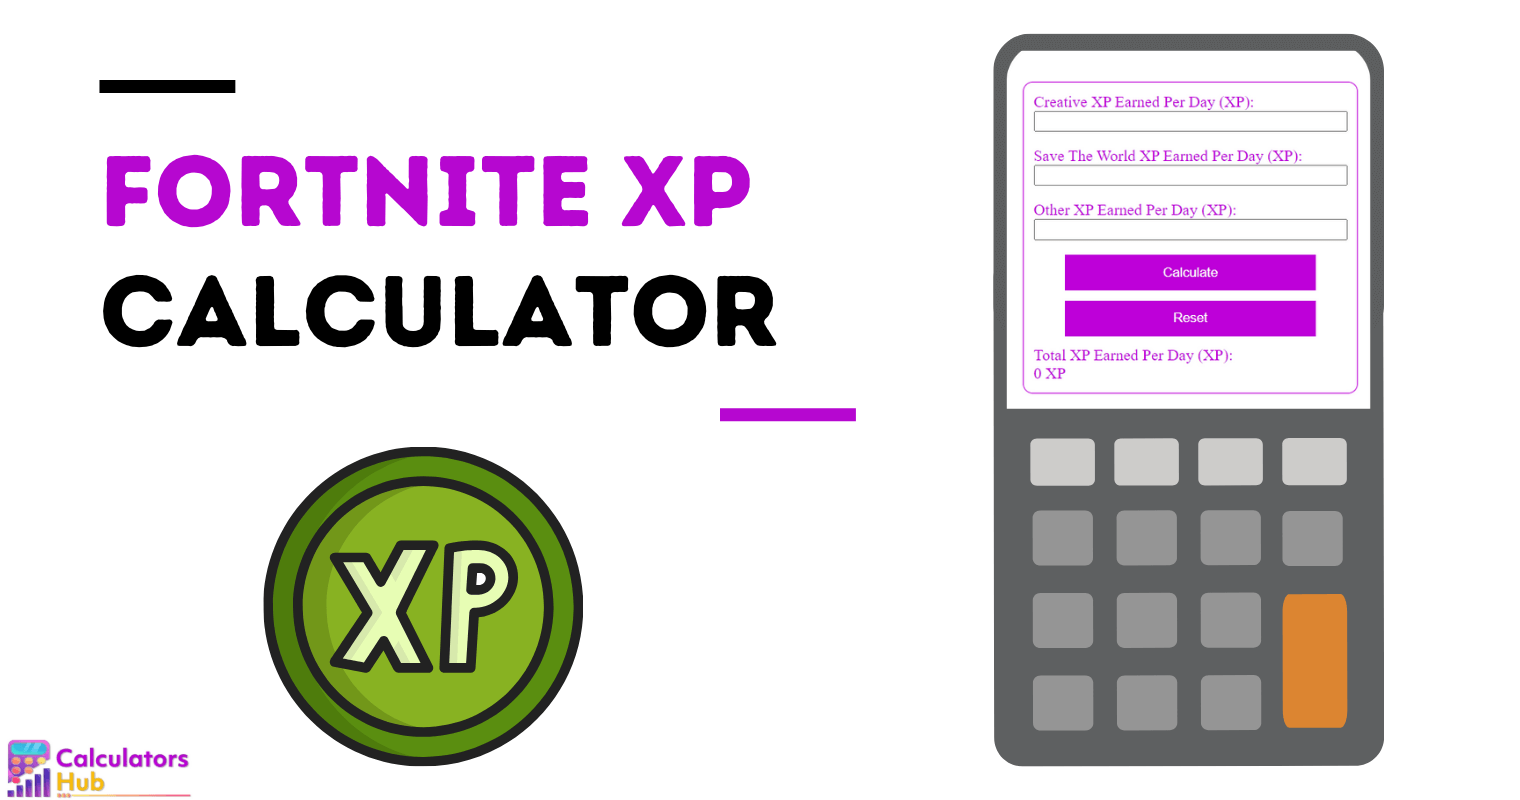 Fortnite XP Calculator